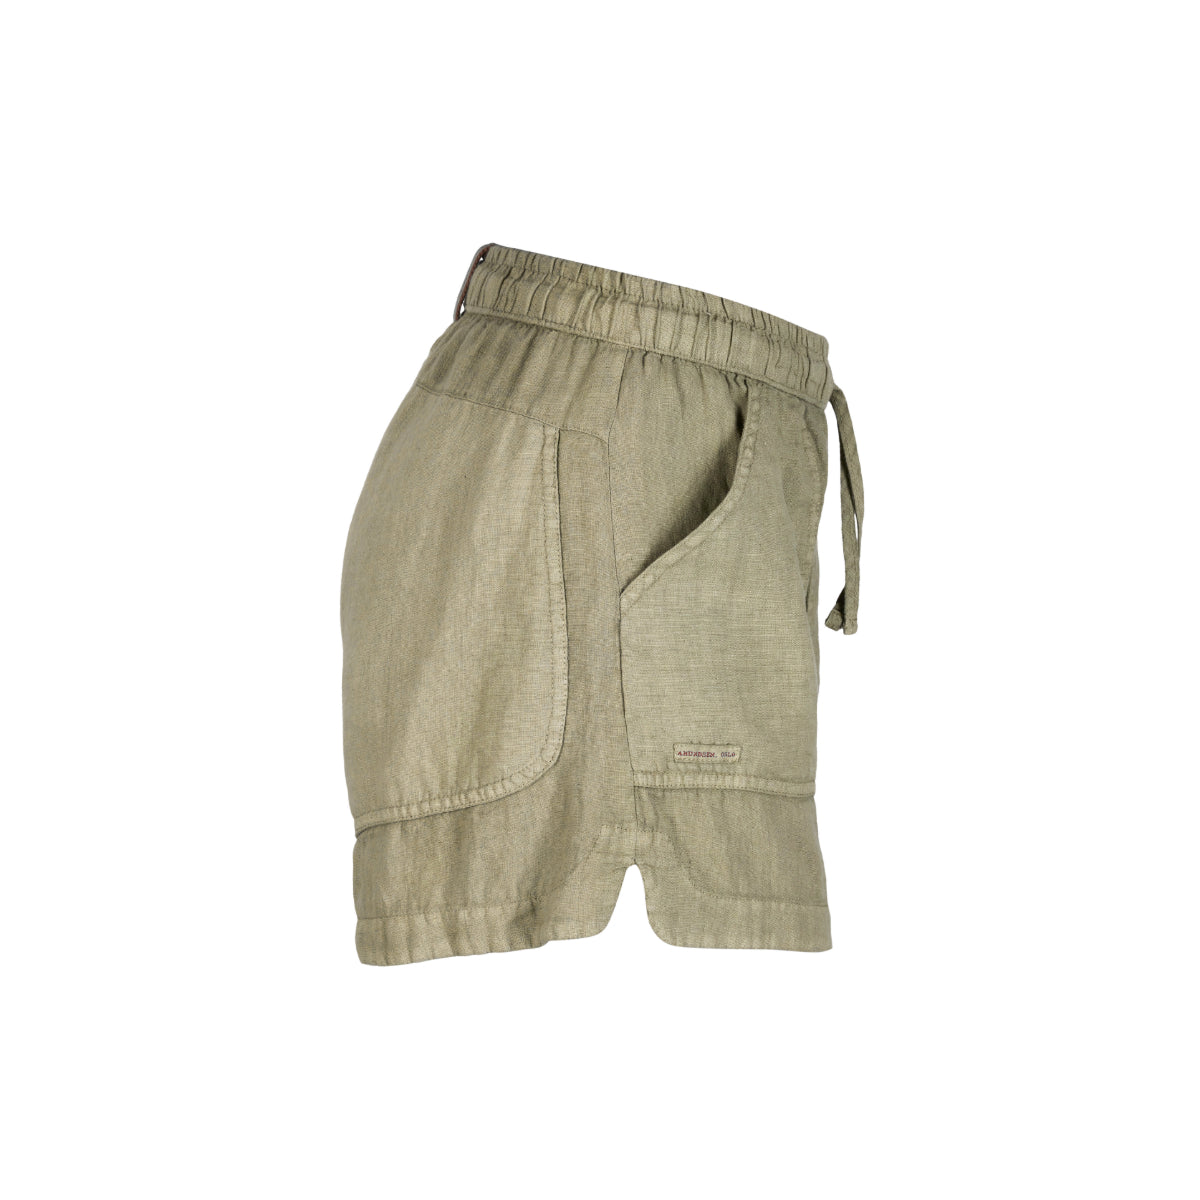 Amundsen Sports - Women's Safari Linen Garment Dyed Shorts - Olive Ash